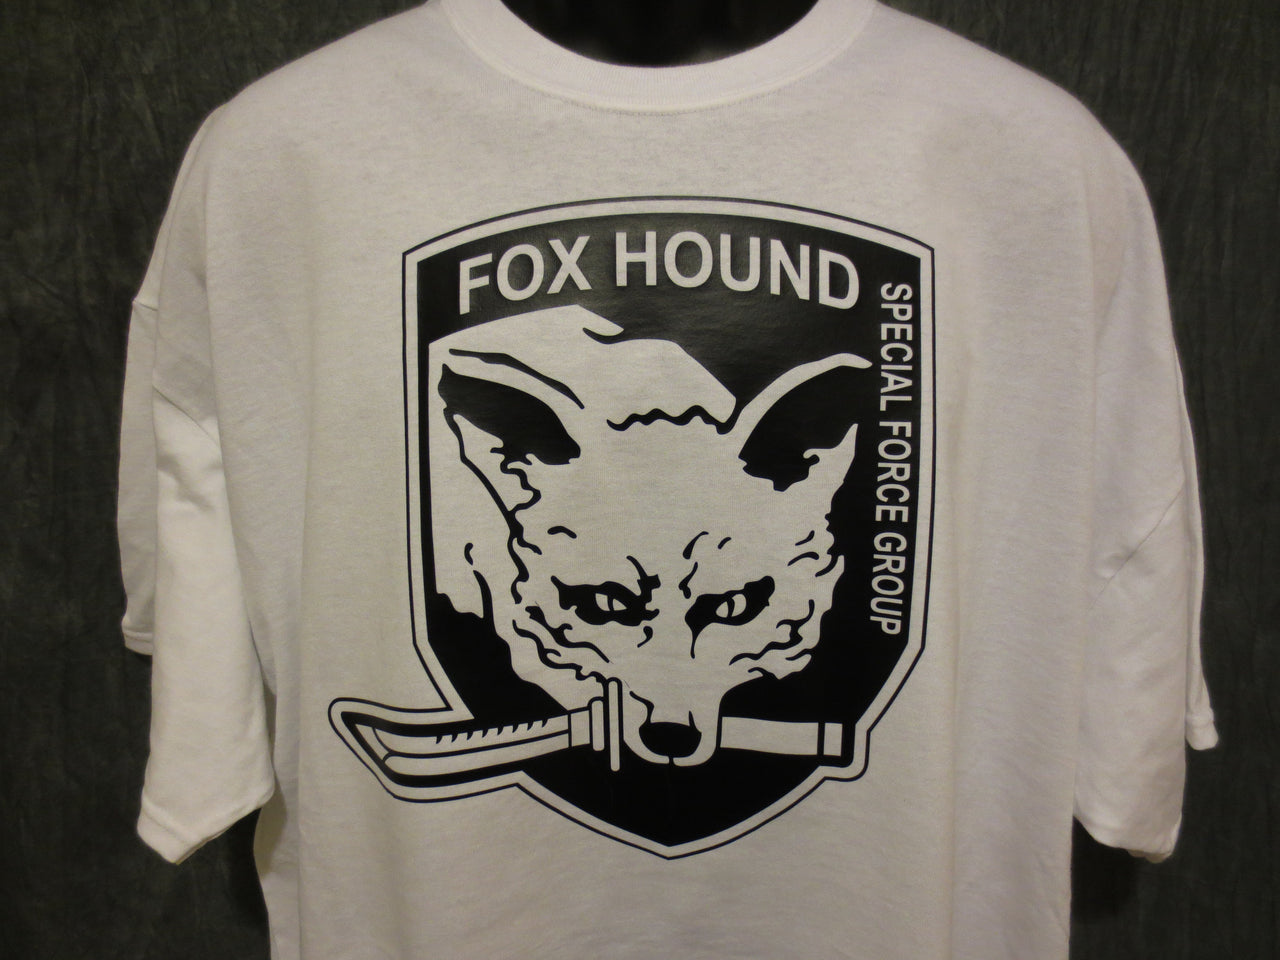 Metal Gear Solid Fox Hound Special Force Group Tshirt:White With Black Print - TshirtNow.net - 2